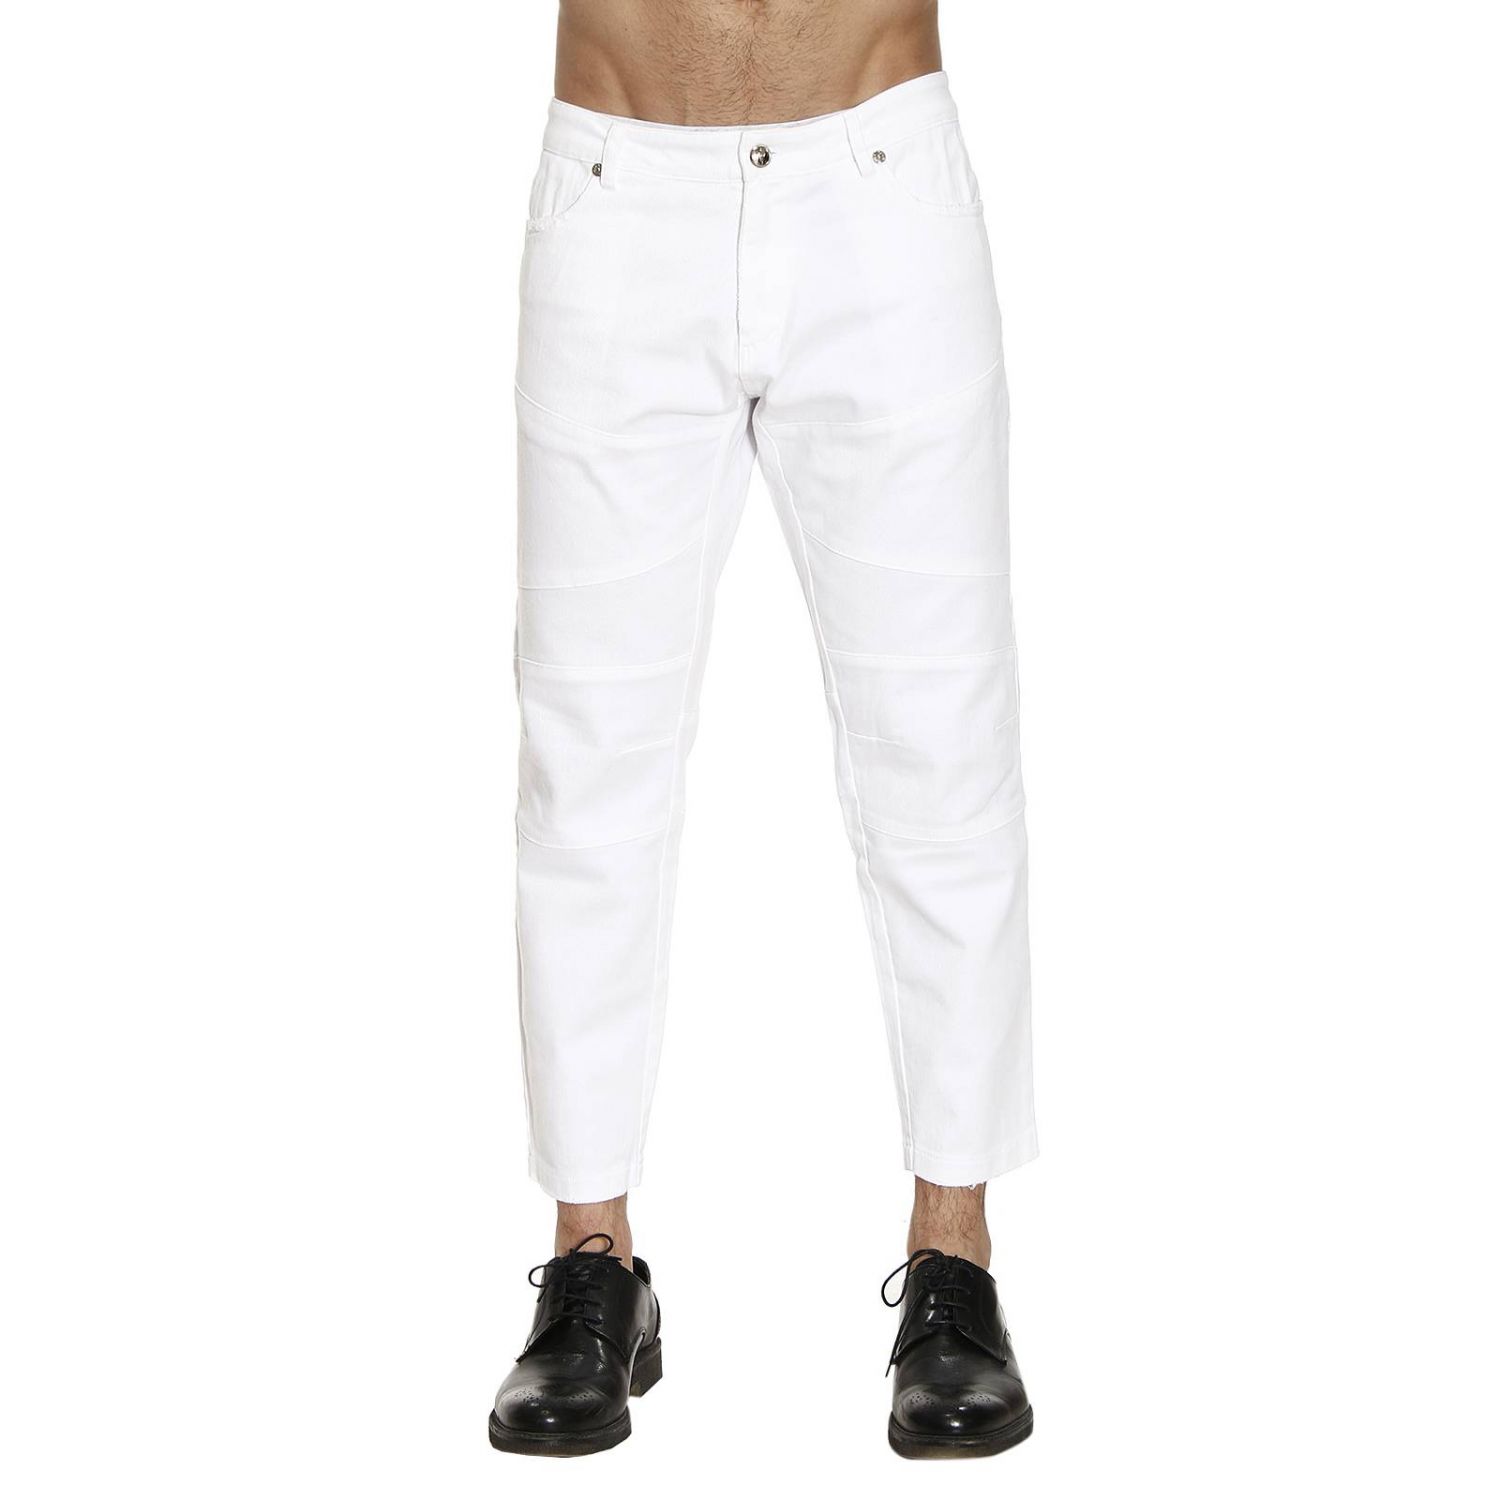 Paciotti 4Us Outlet: Jeans men - White | Jeans Paciotti 4Us 1108 GIGLIO.COM